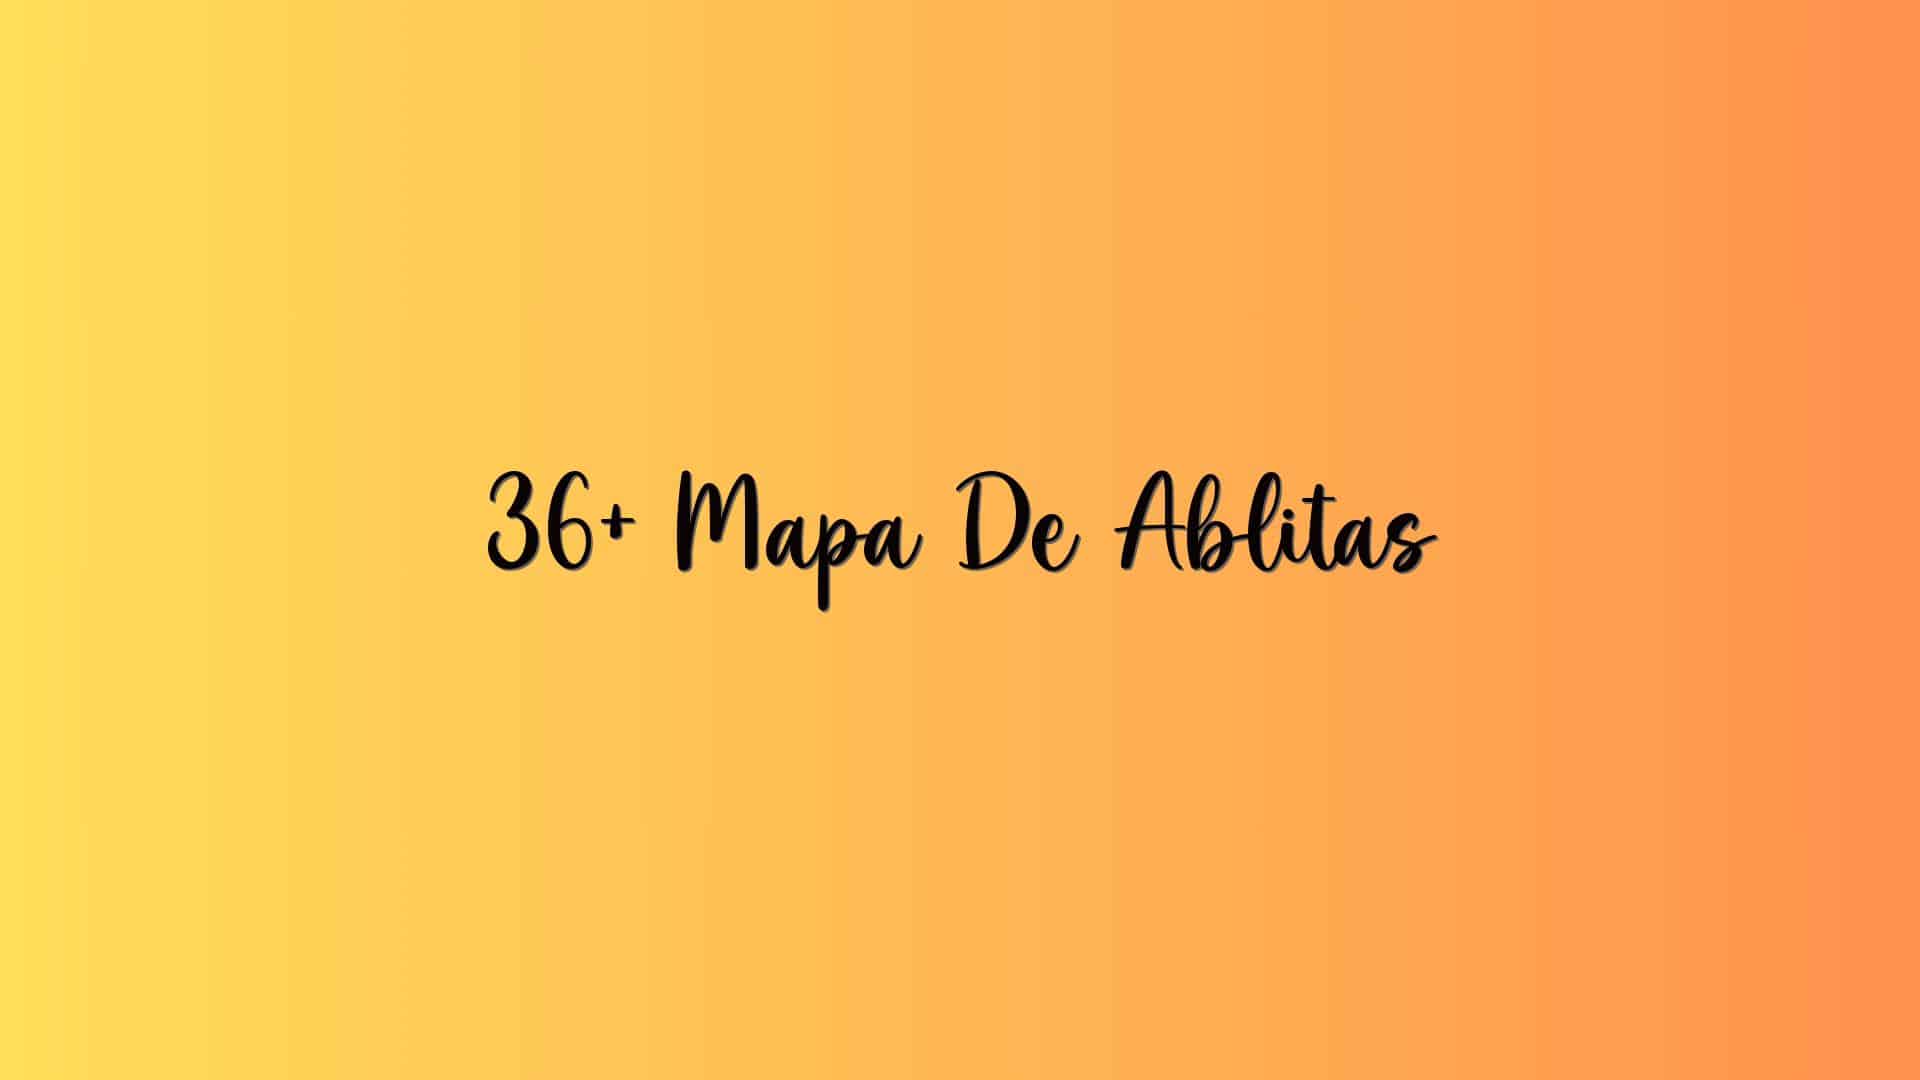 36+ Mapa De Ablitas